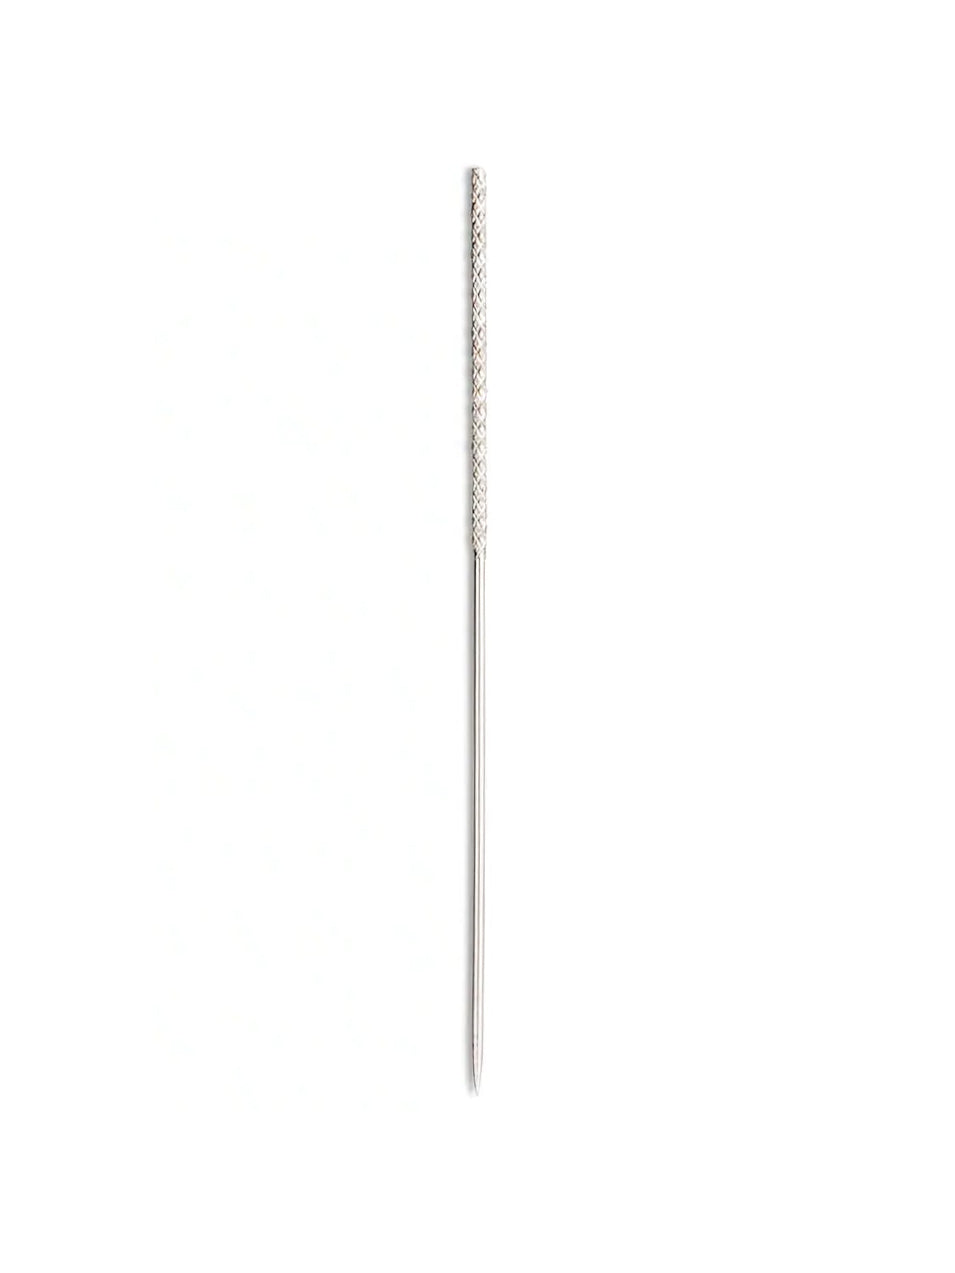 A Snag Repair Needle from Prym